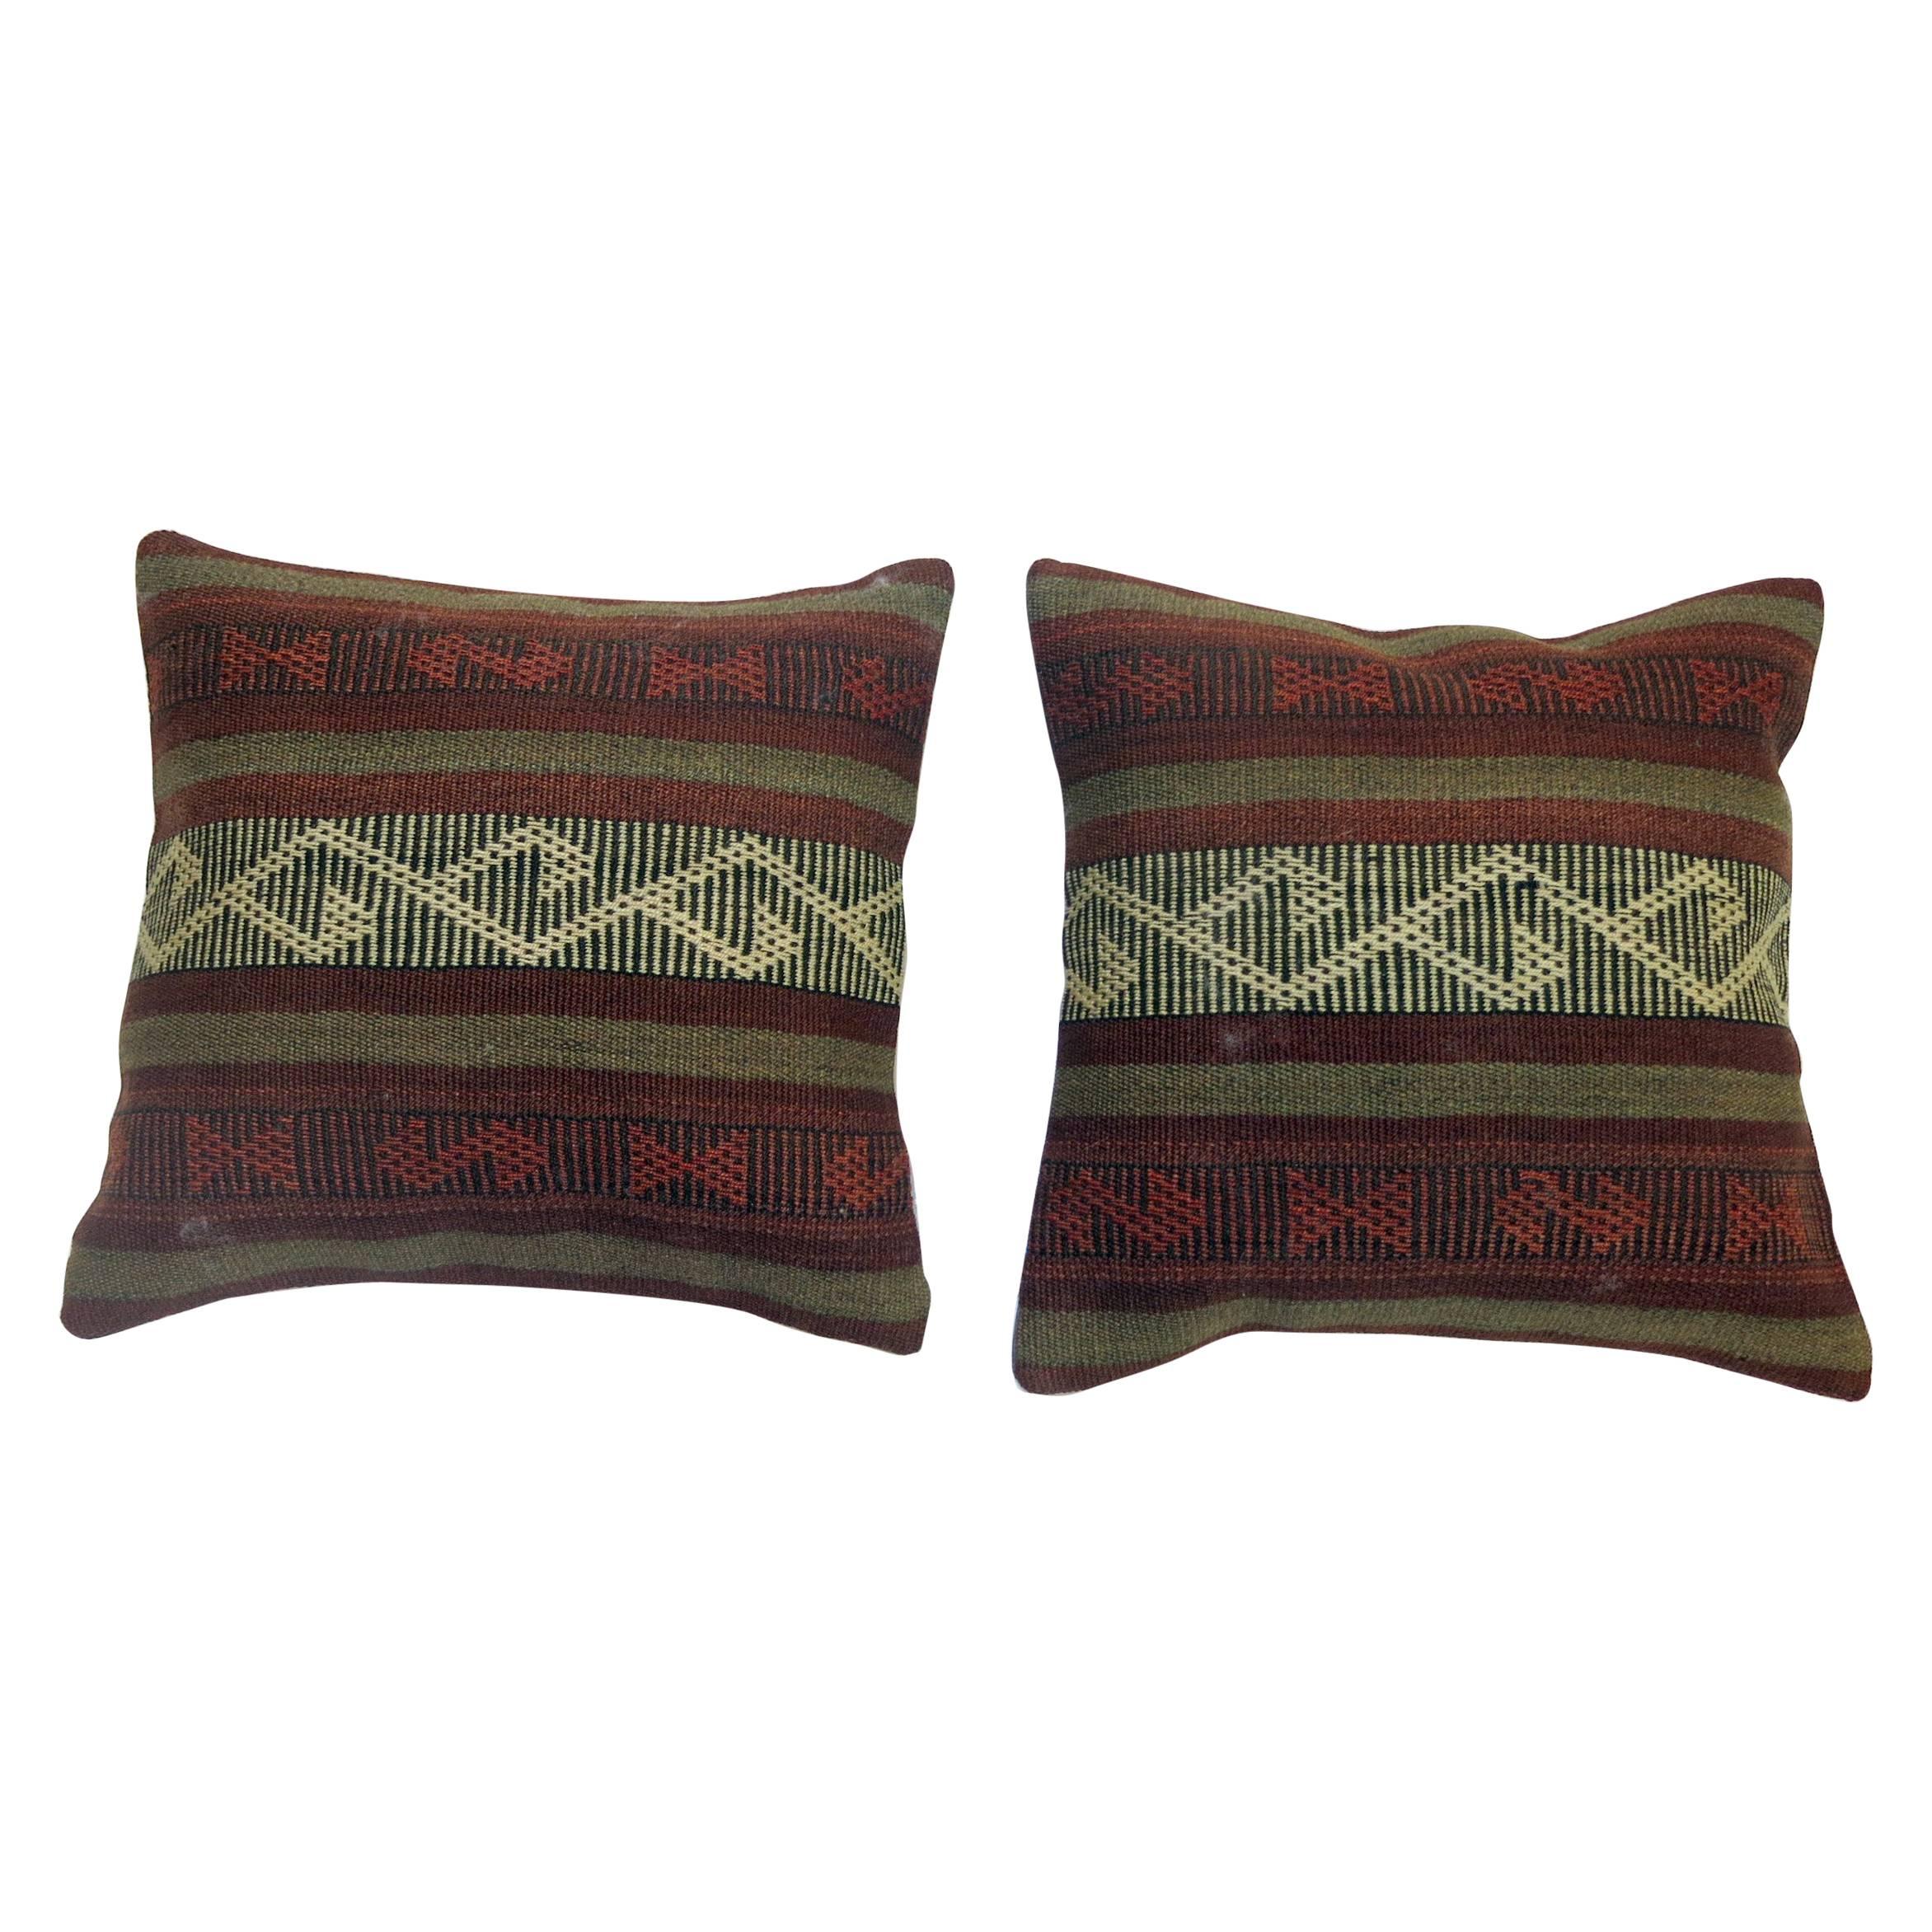 Pair of Kilim Pillows